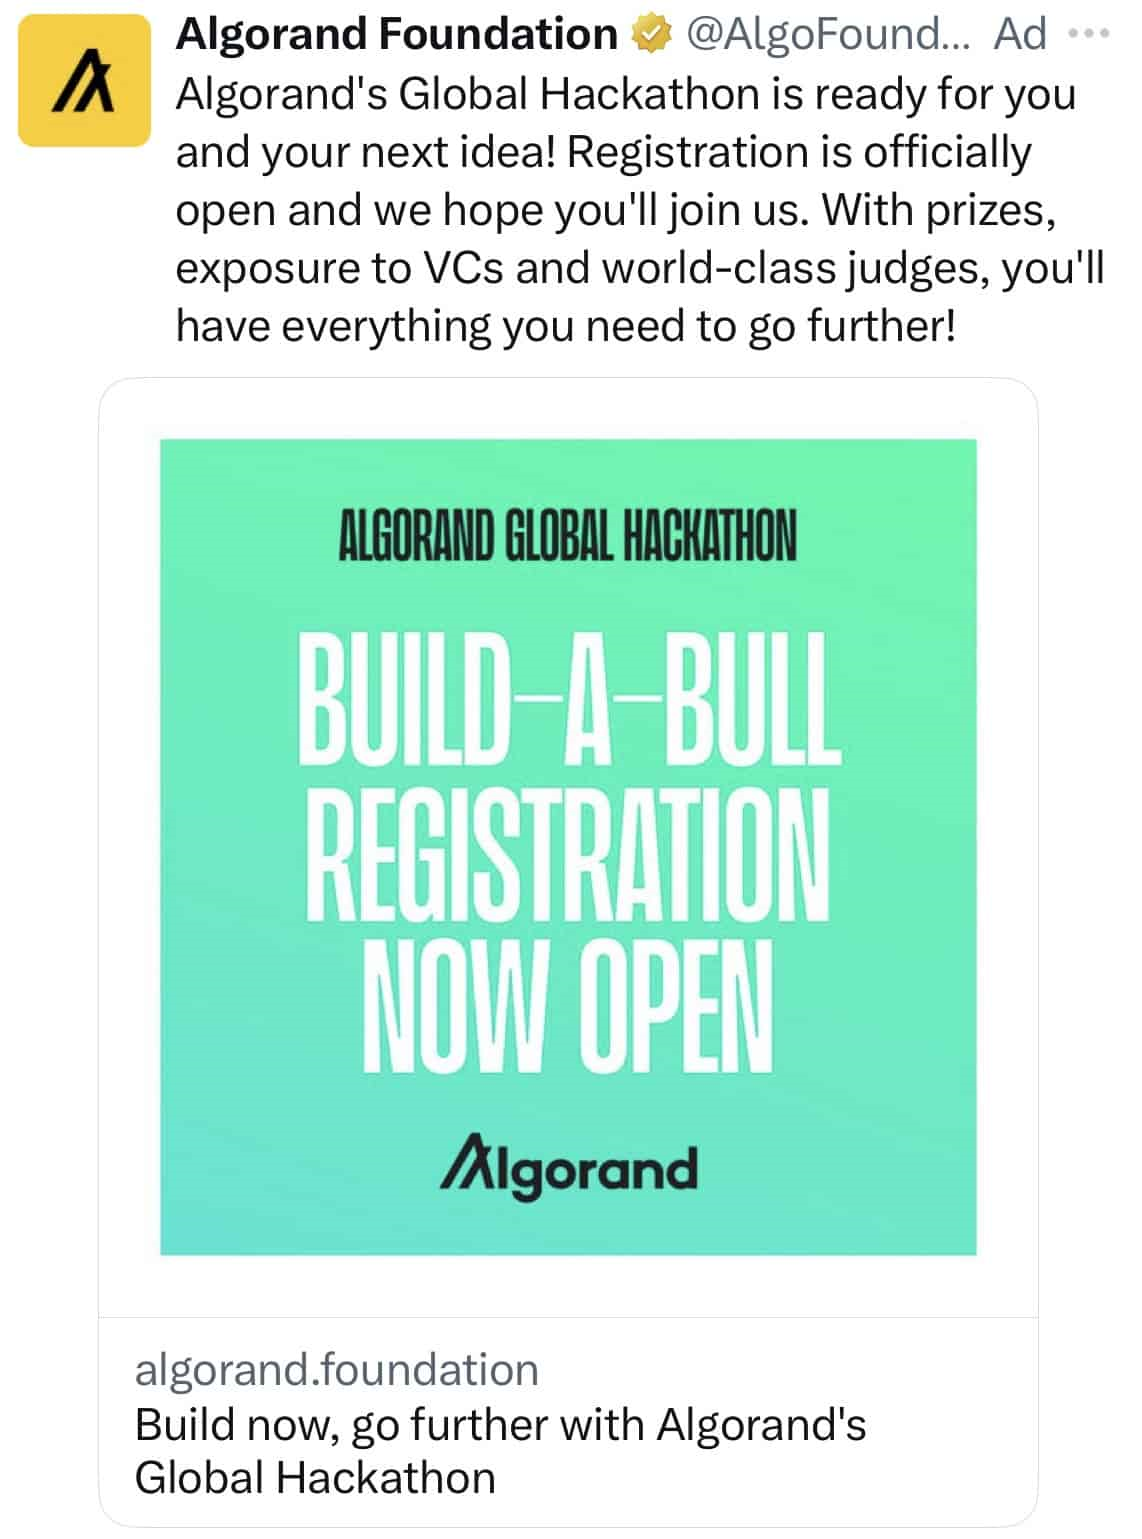 Algorand Foundation’s ad on X